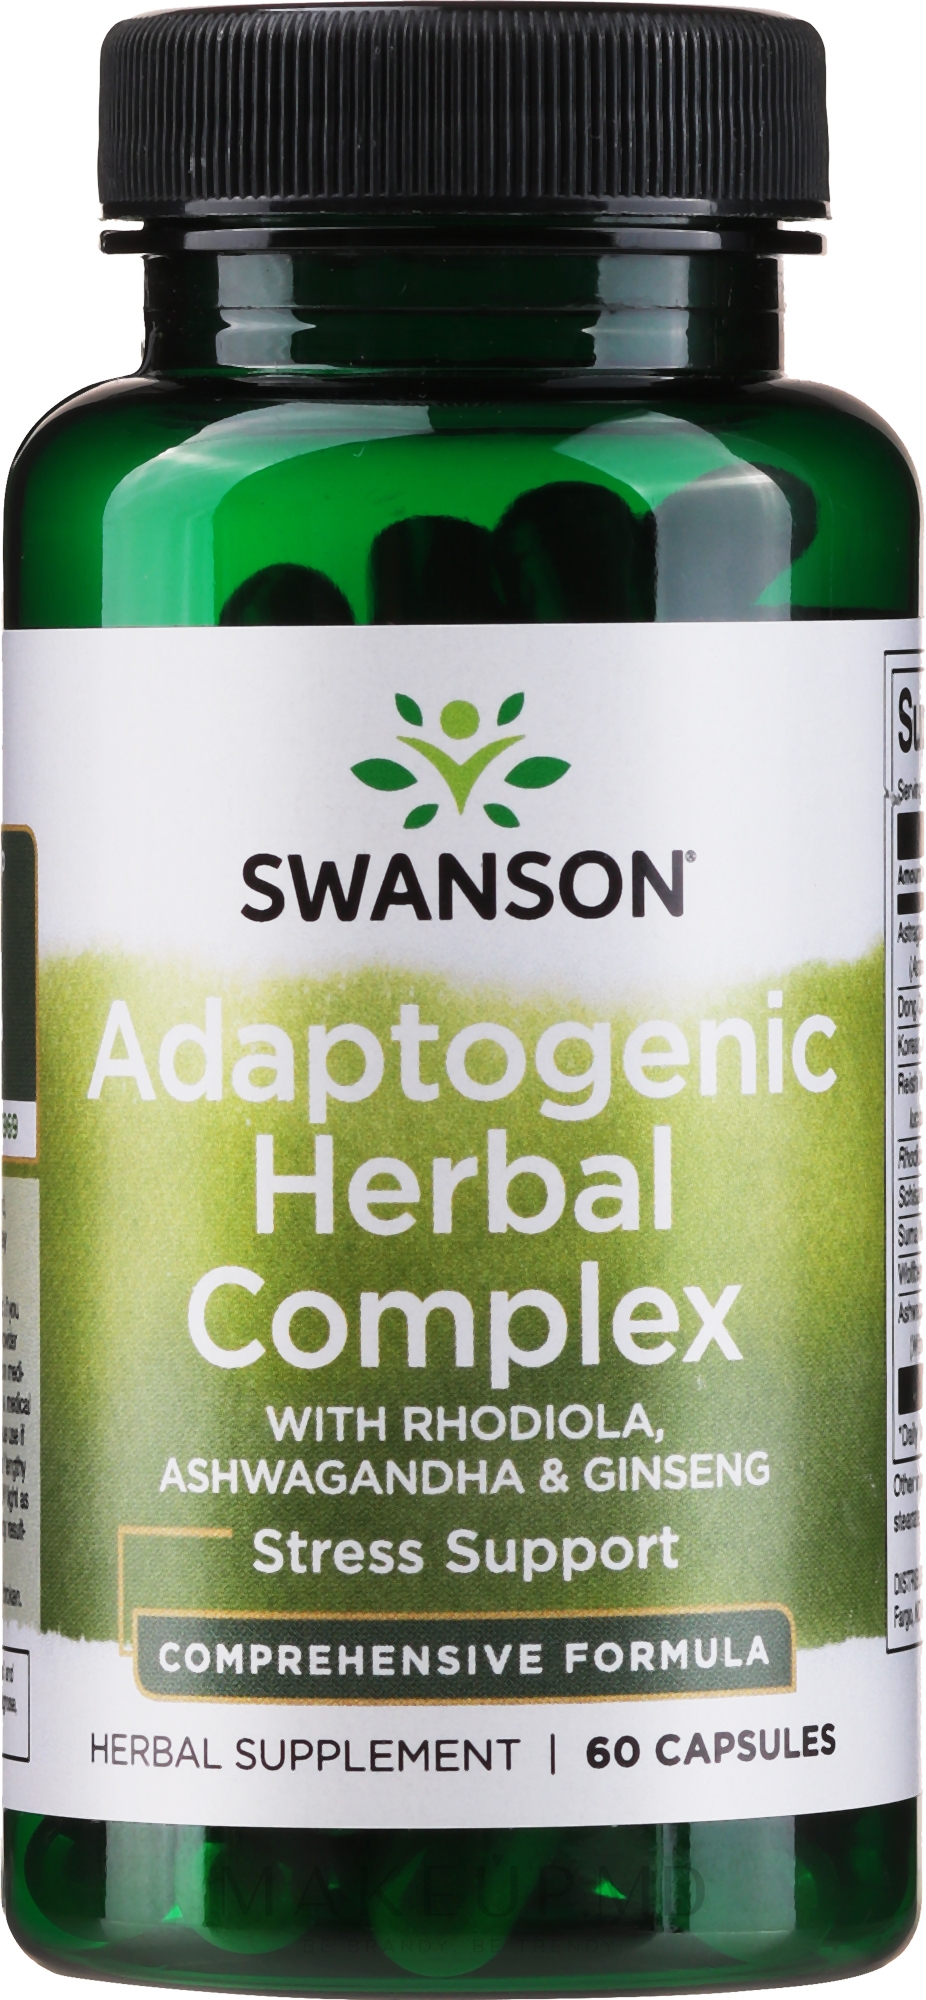 Swanson Адаптоген, Растительный Комплекс 60 капсул